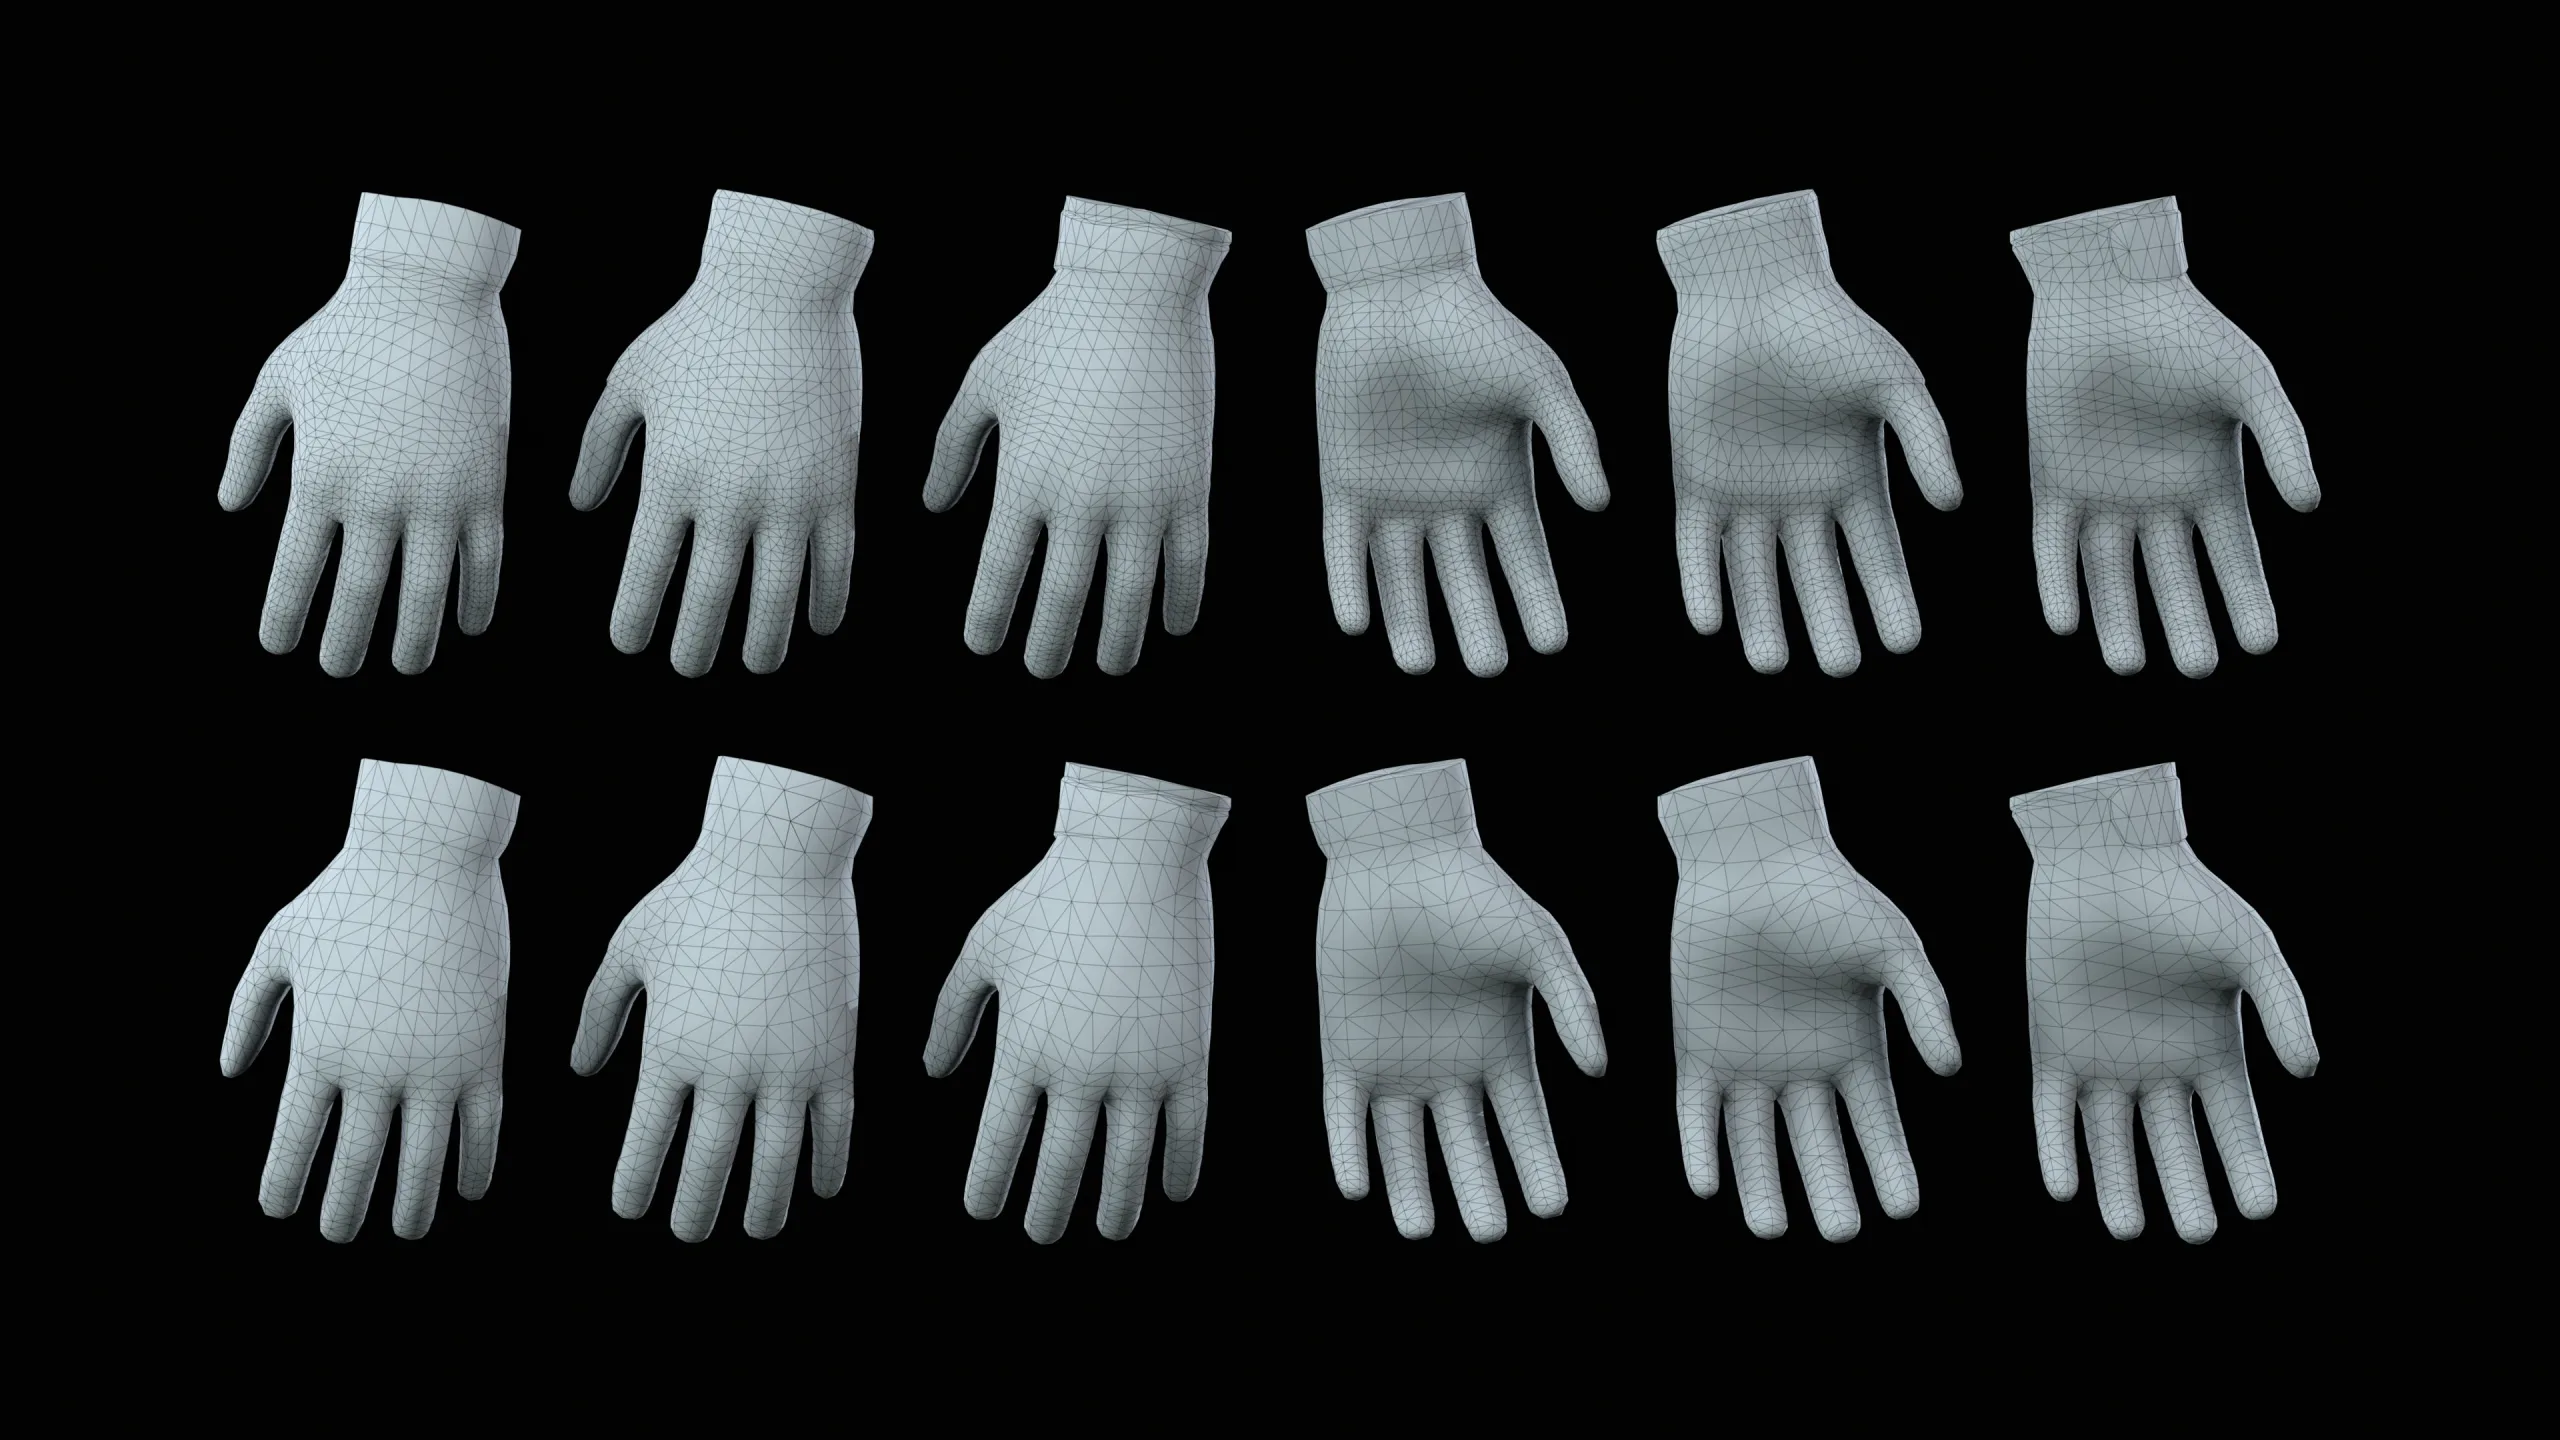 Sci-Fi Gloves